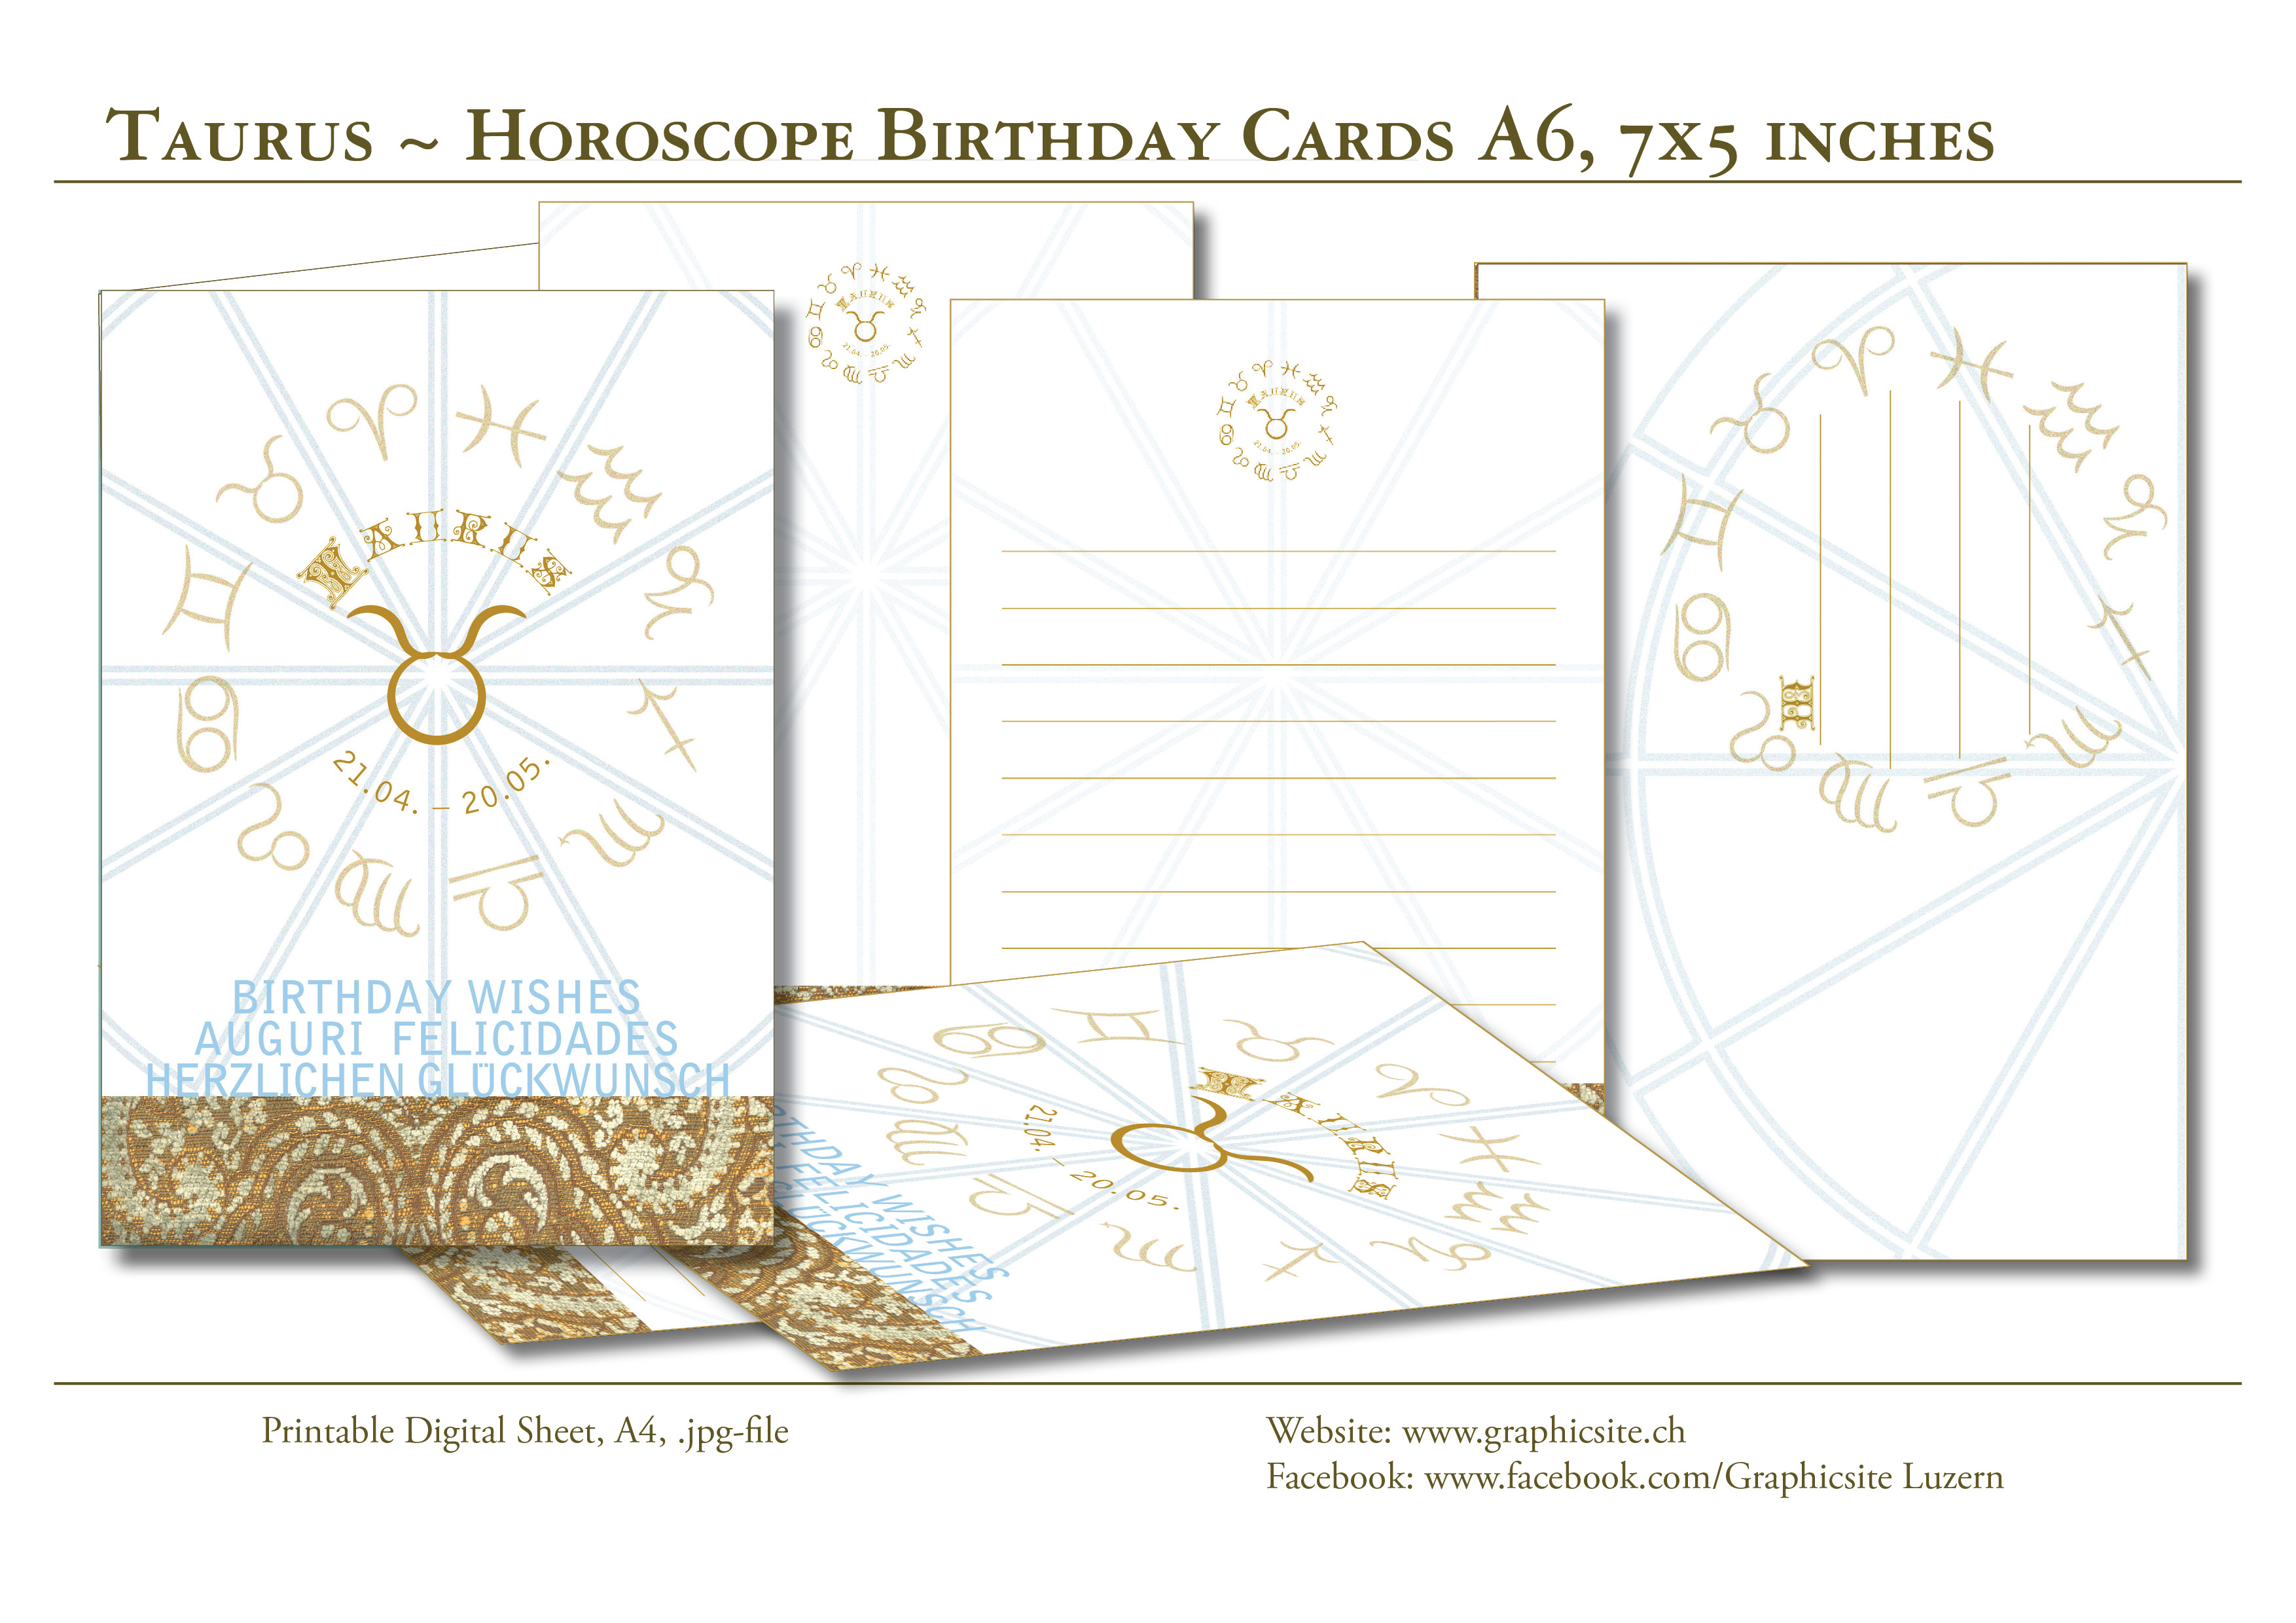 Printable Digital Sheets - Birthday Card Collection - Horoscope - Zodiac - Taurus A6 - GraphicDesign, Luzern